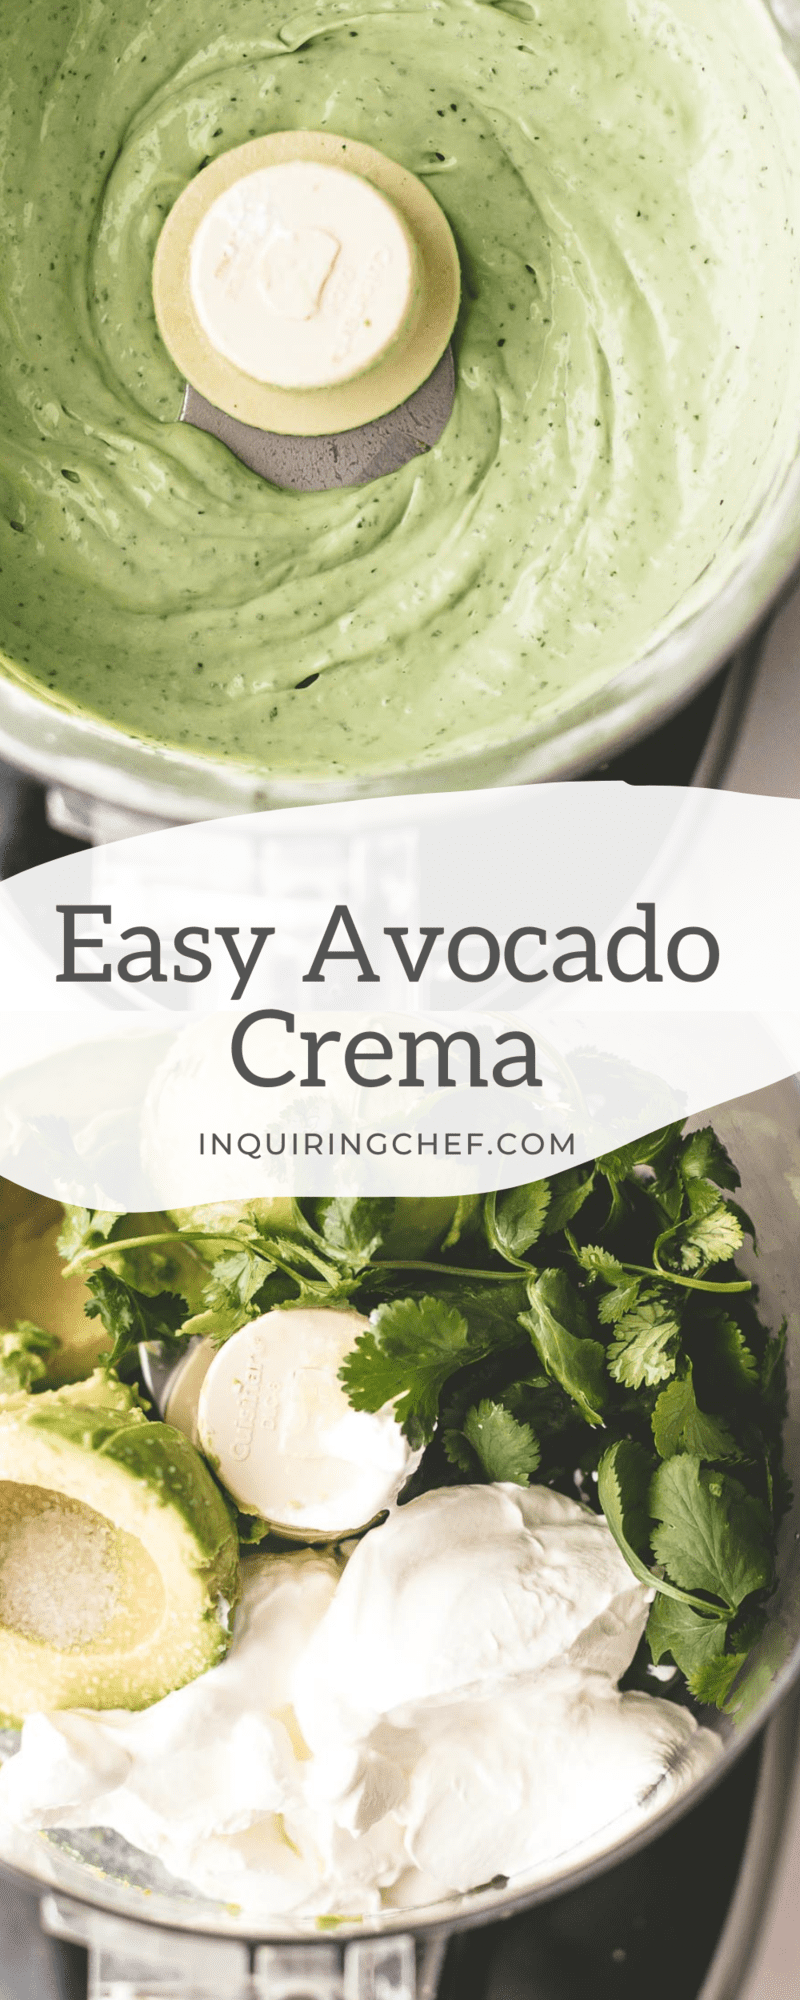 easy avocado crema graphic